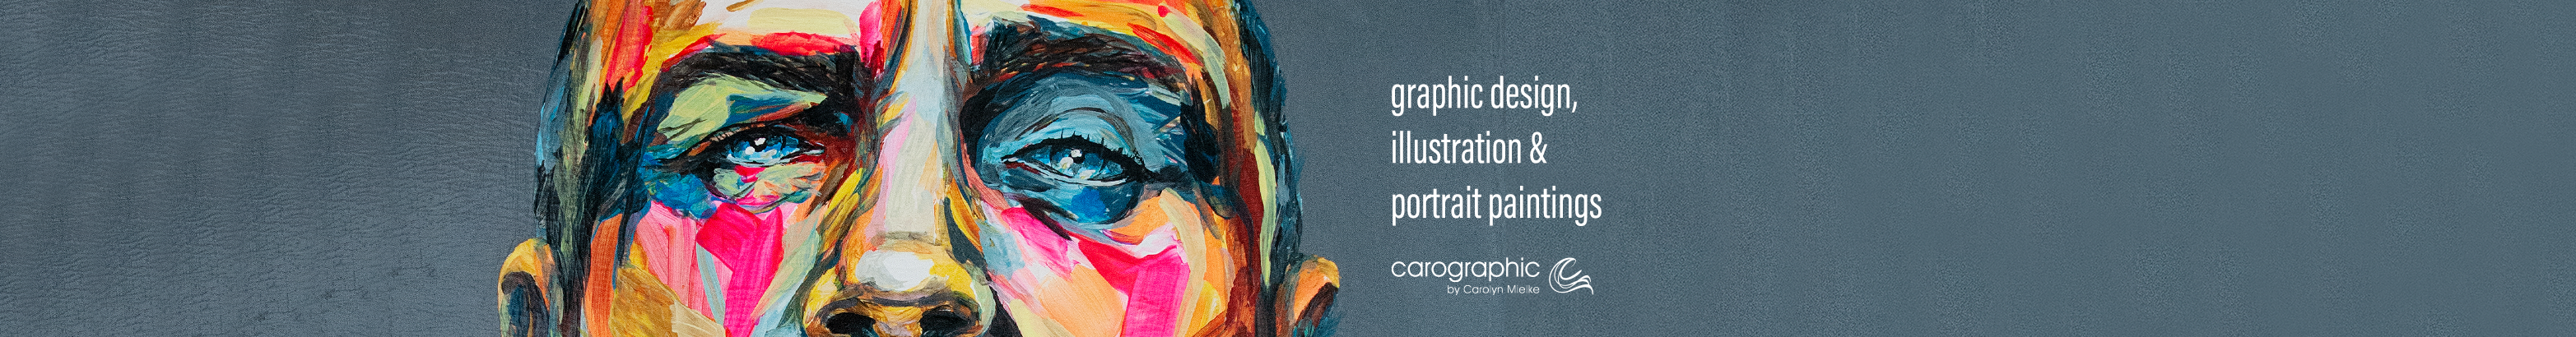 carographic by Carolyn Mielke's profile banner